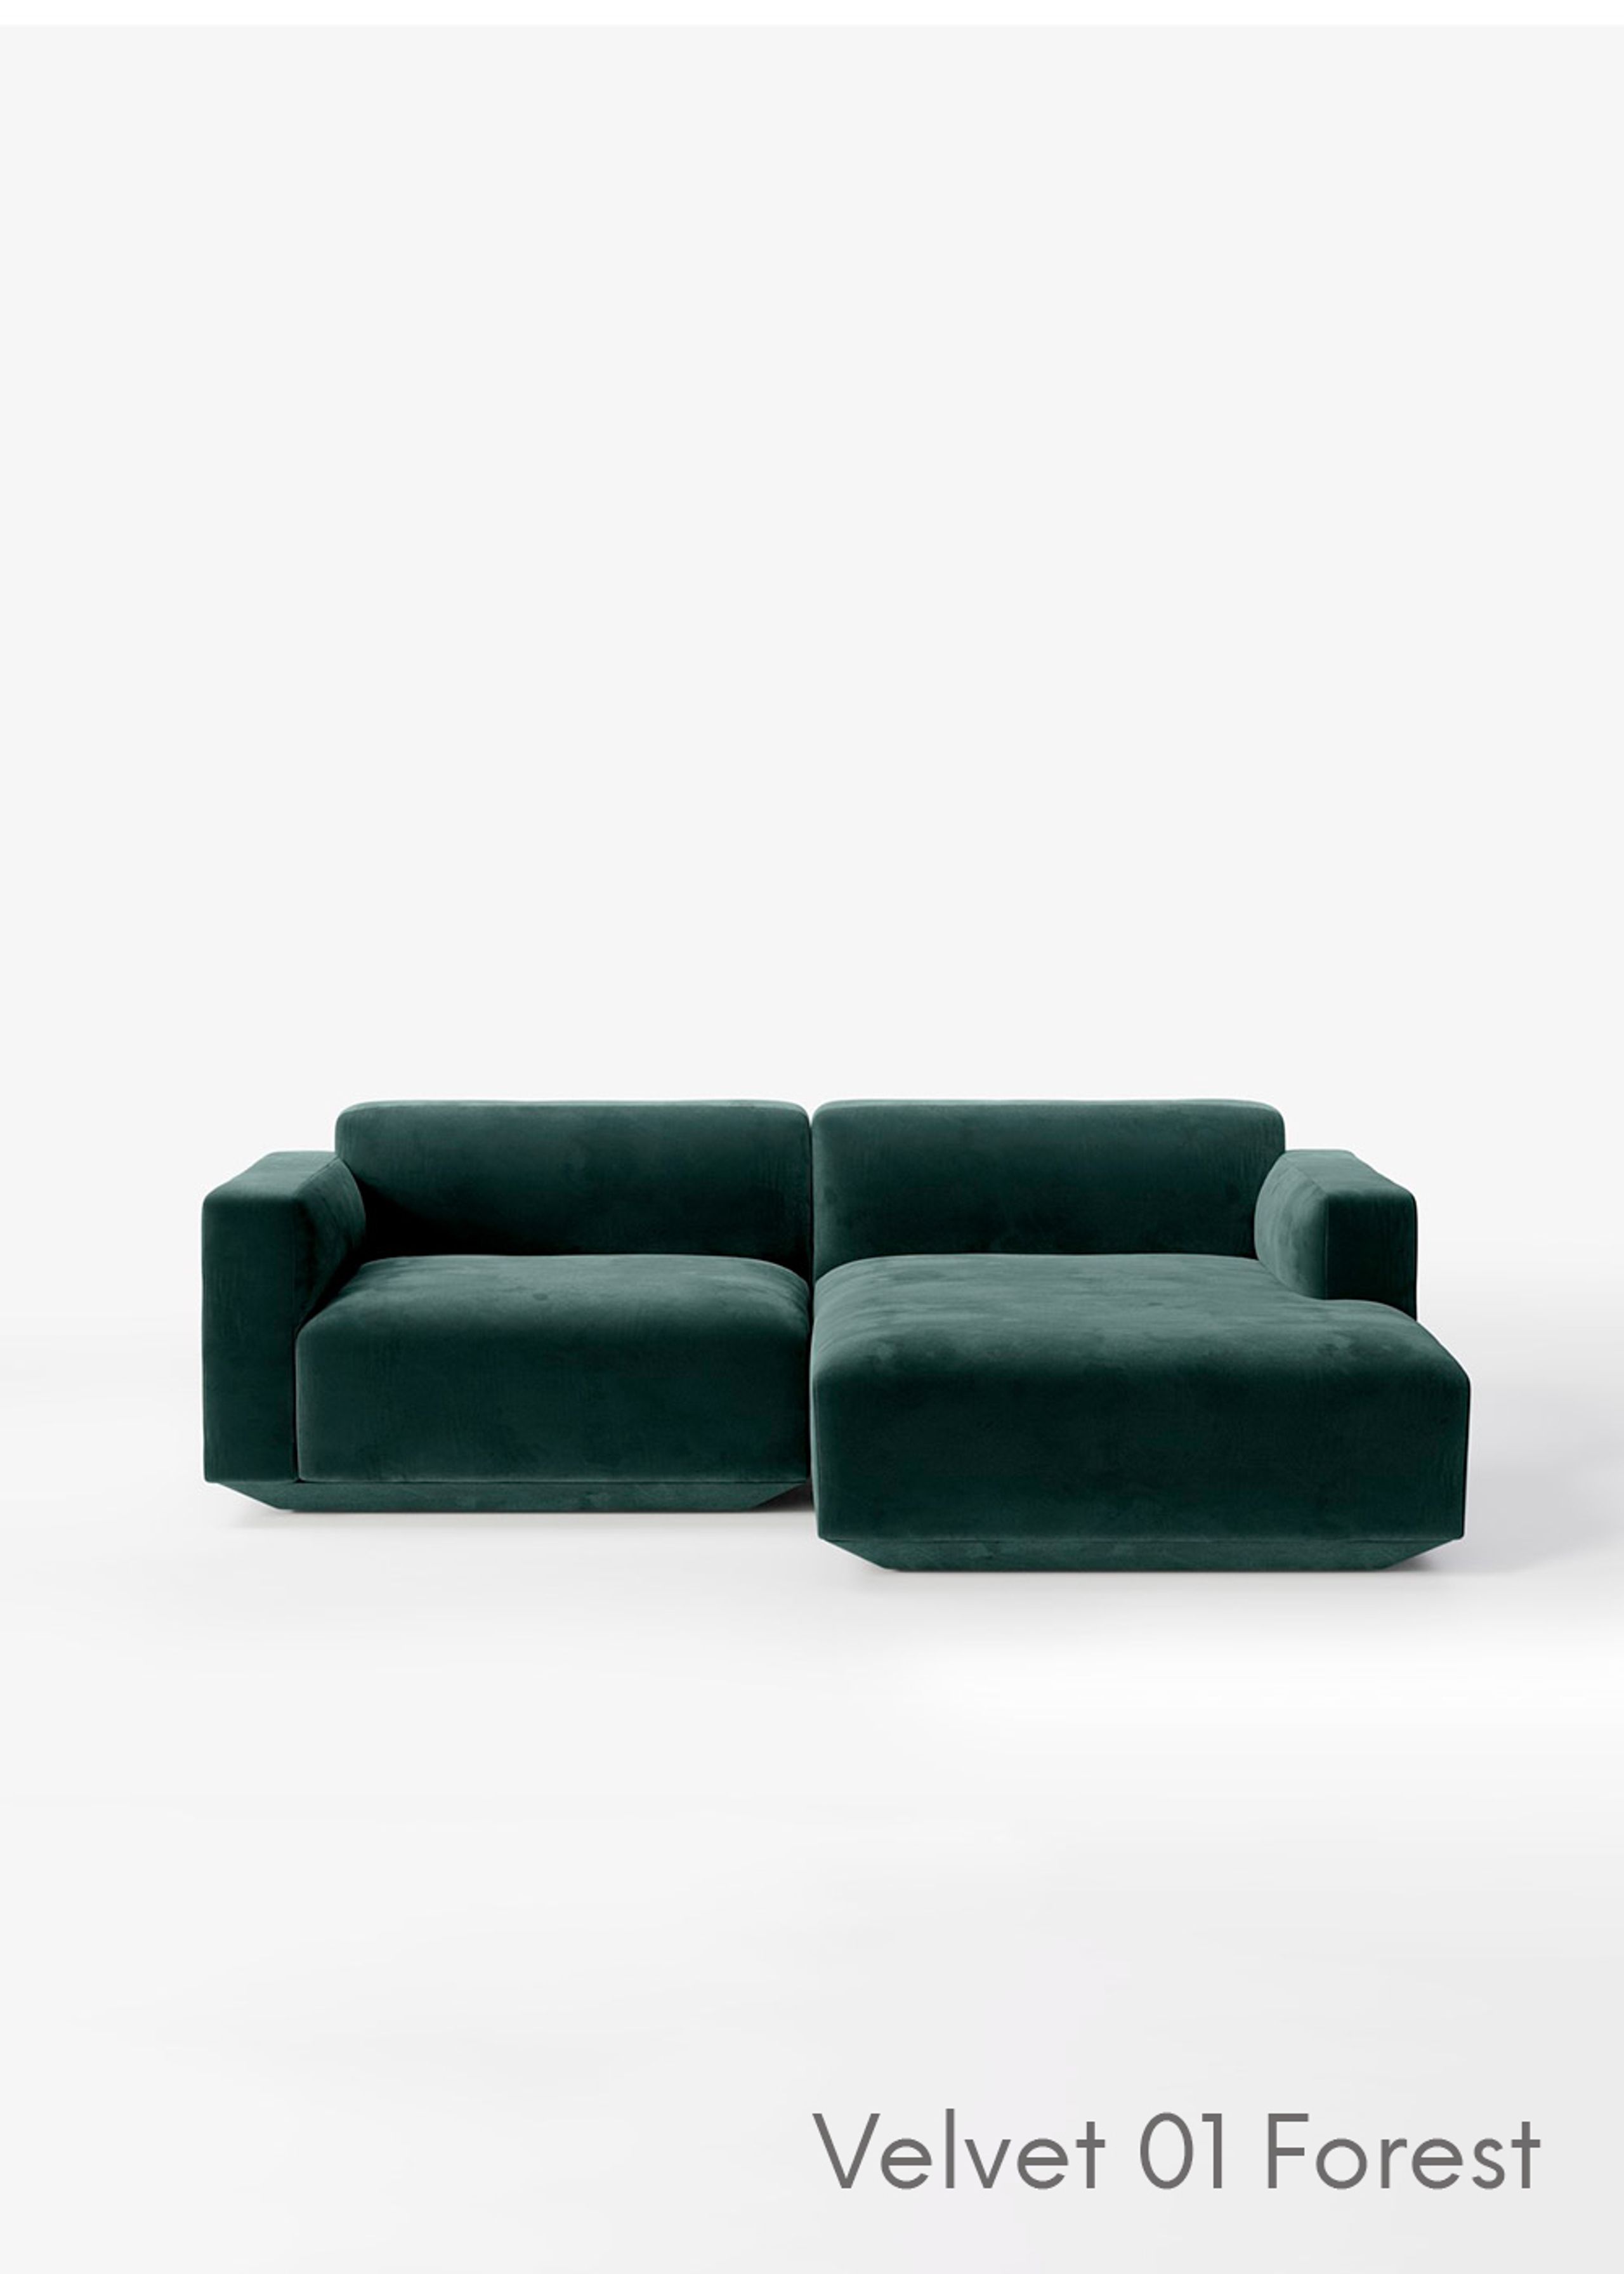 &tradition - Sofa - Develius by Edward van Vliet | Configurations - Configuration B